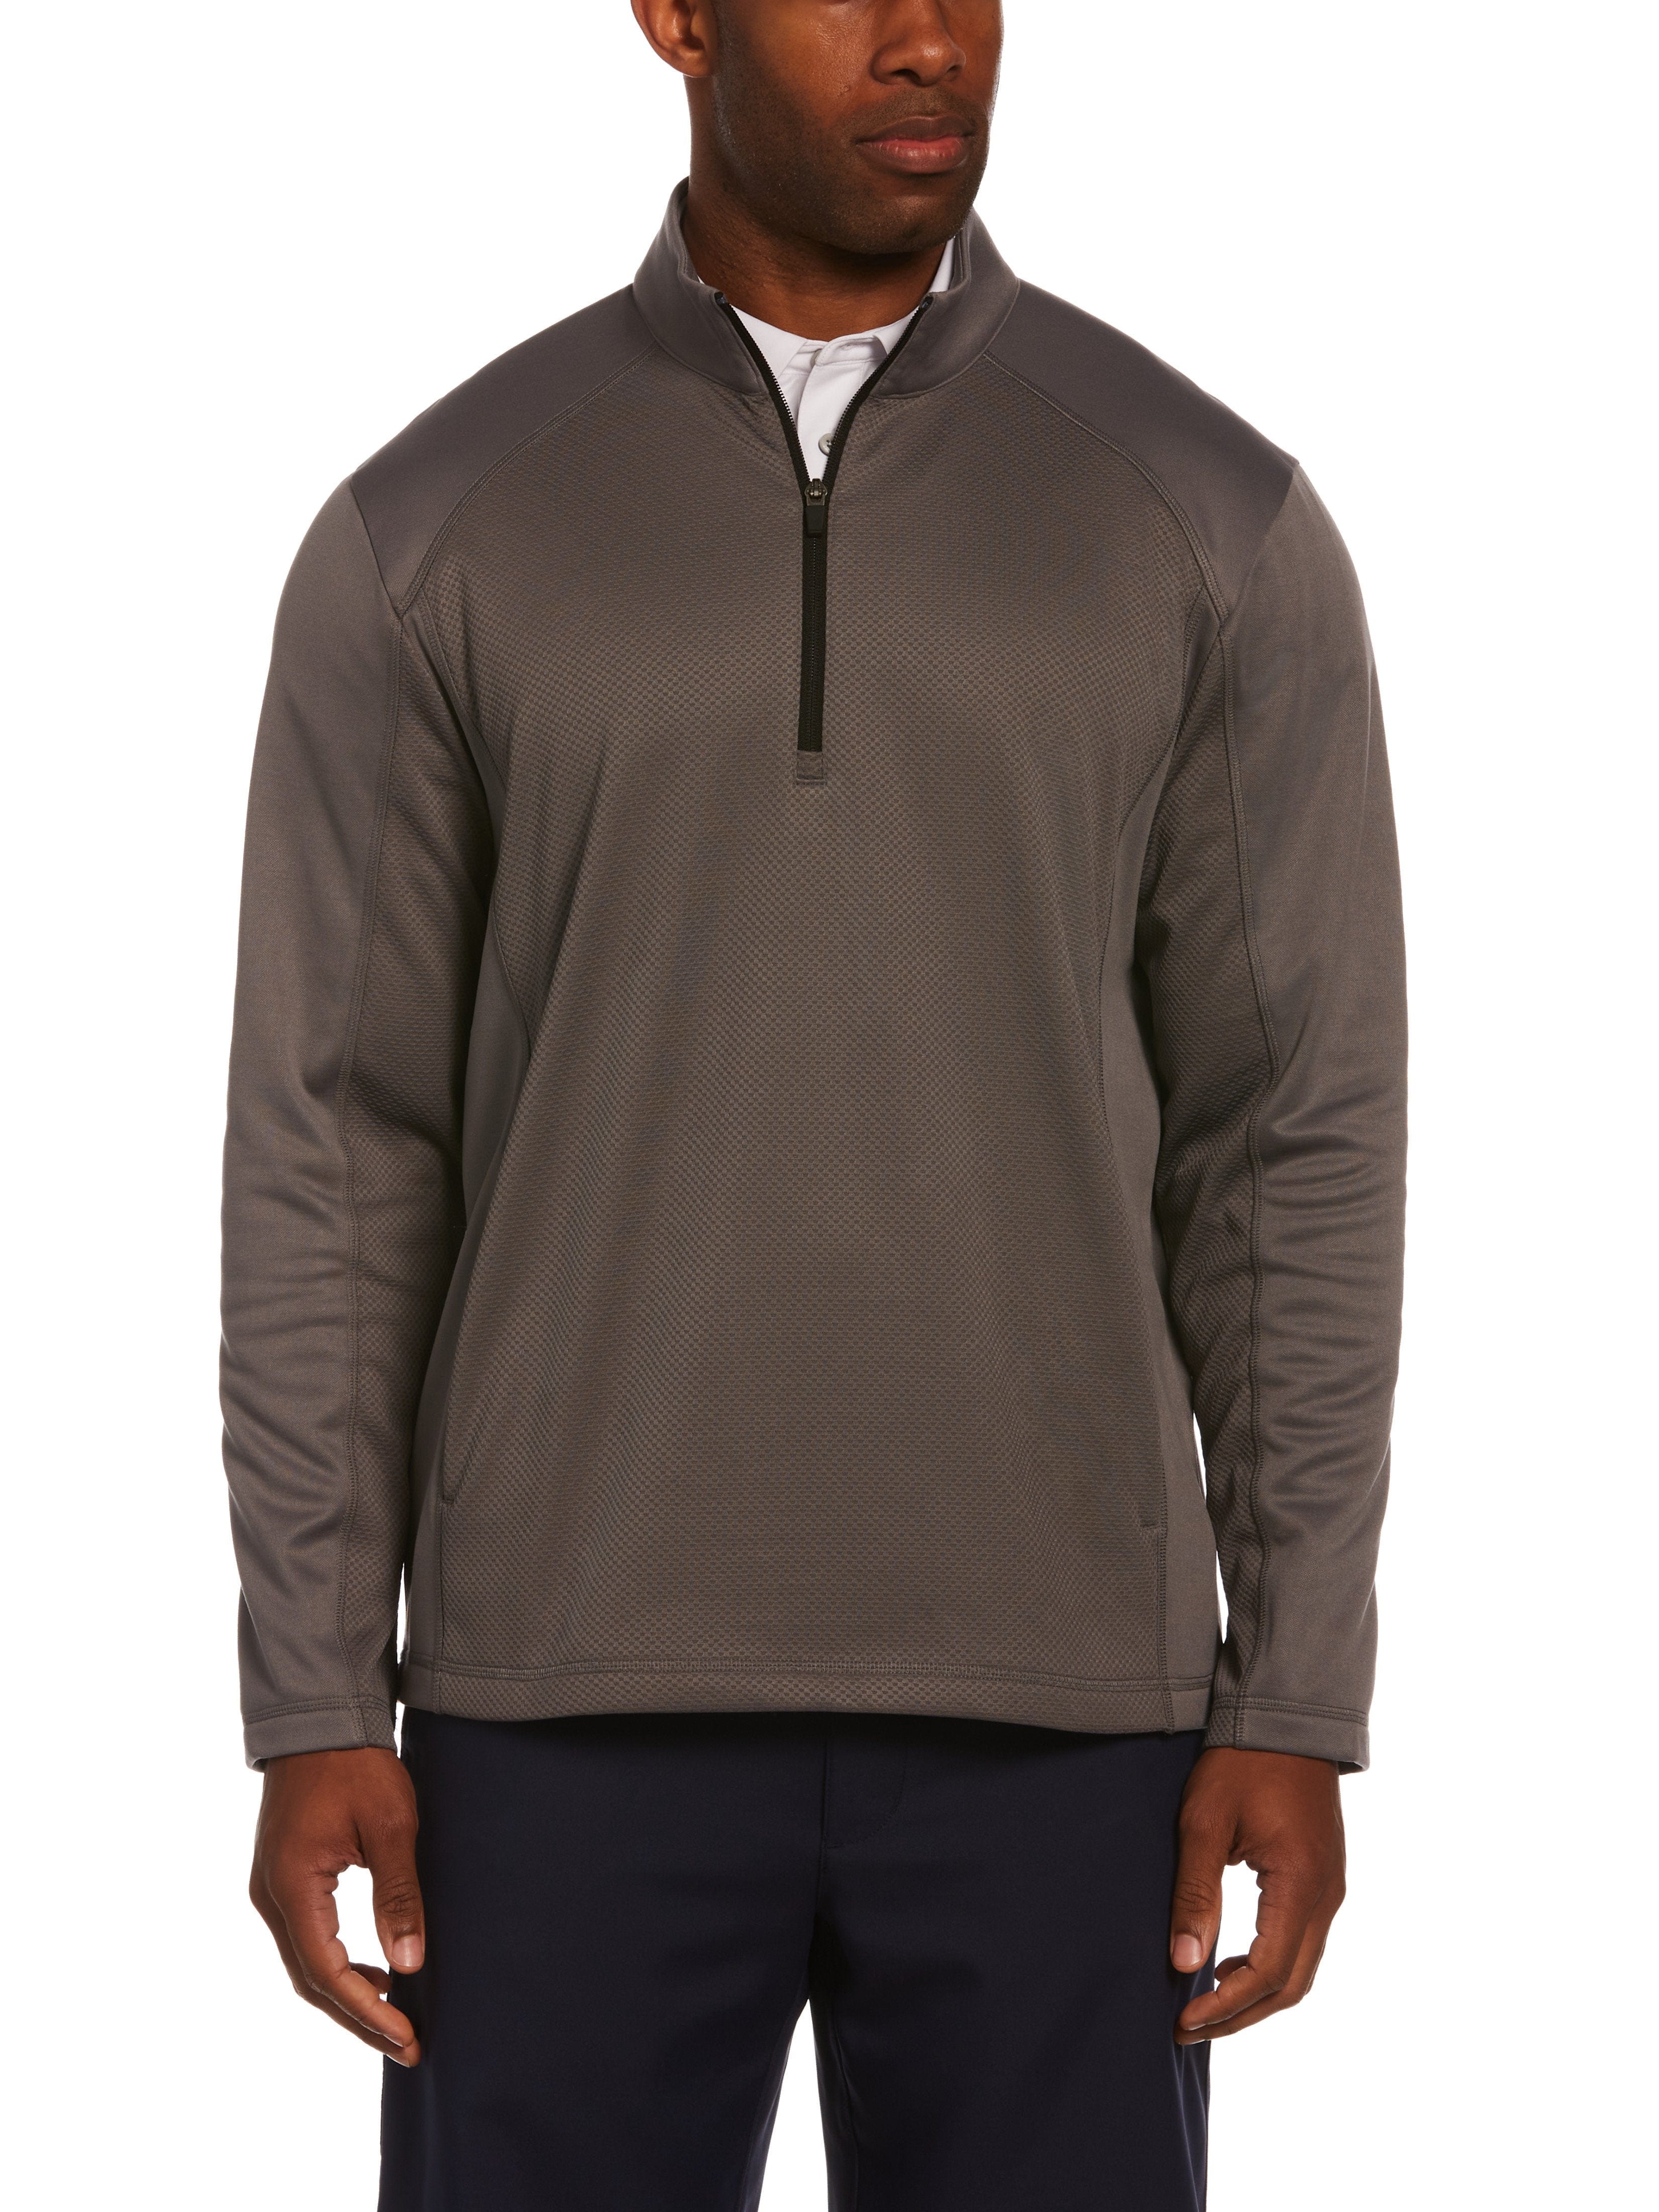 PGA TOUR Apparel Mens Mixed Texture Fleece 1/4 Zip Golf Jacket Top, Size Small, Quiet Shade Gray, 100% Polyester | Golf Apparel Shop